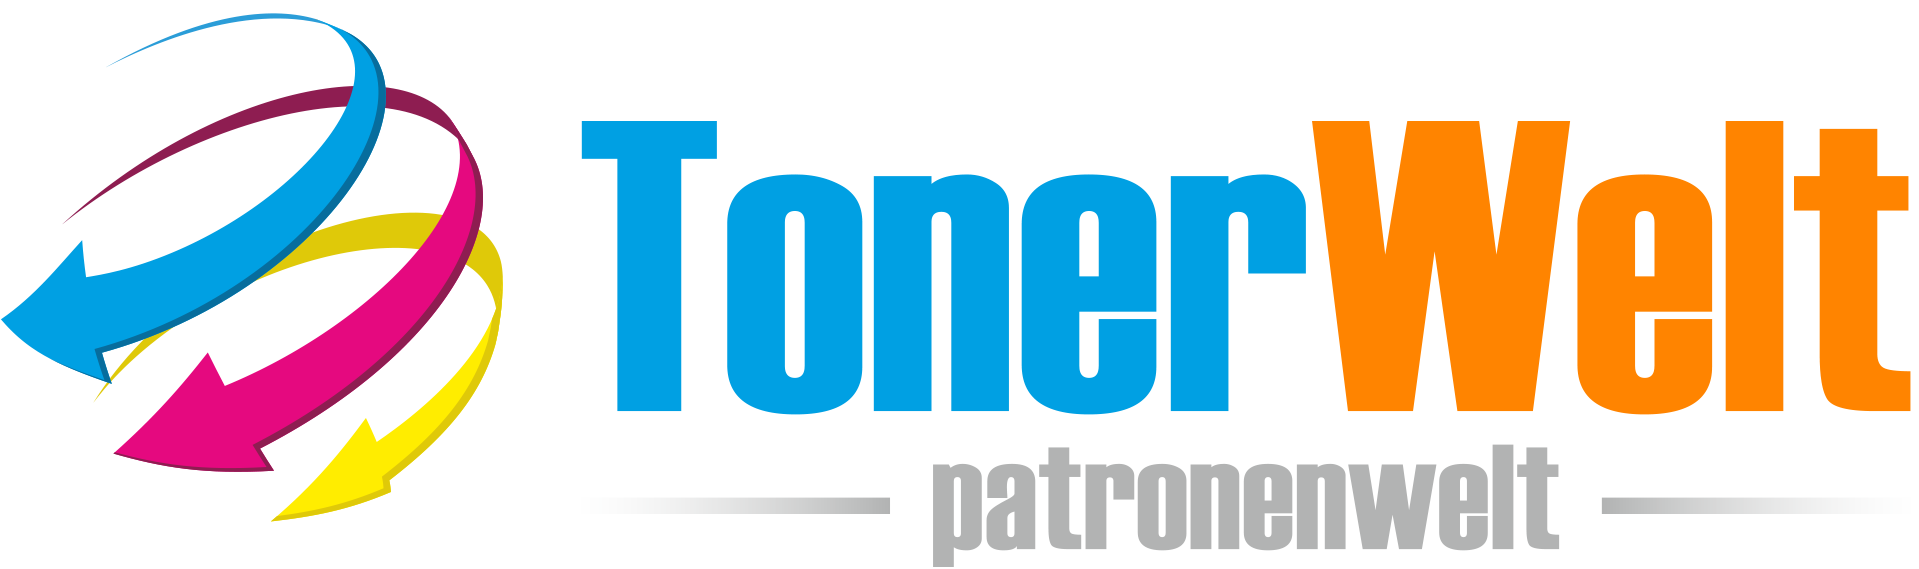 Tonerwelt Header Logo